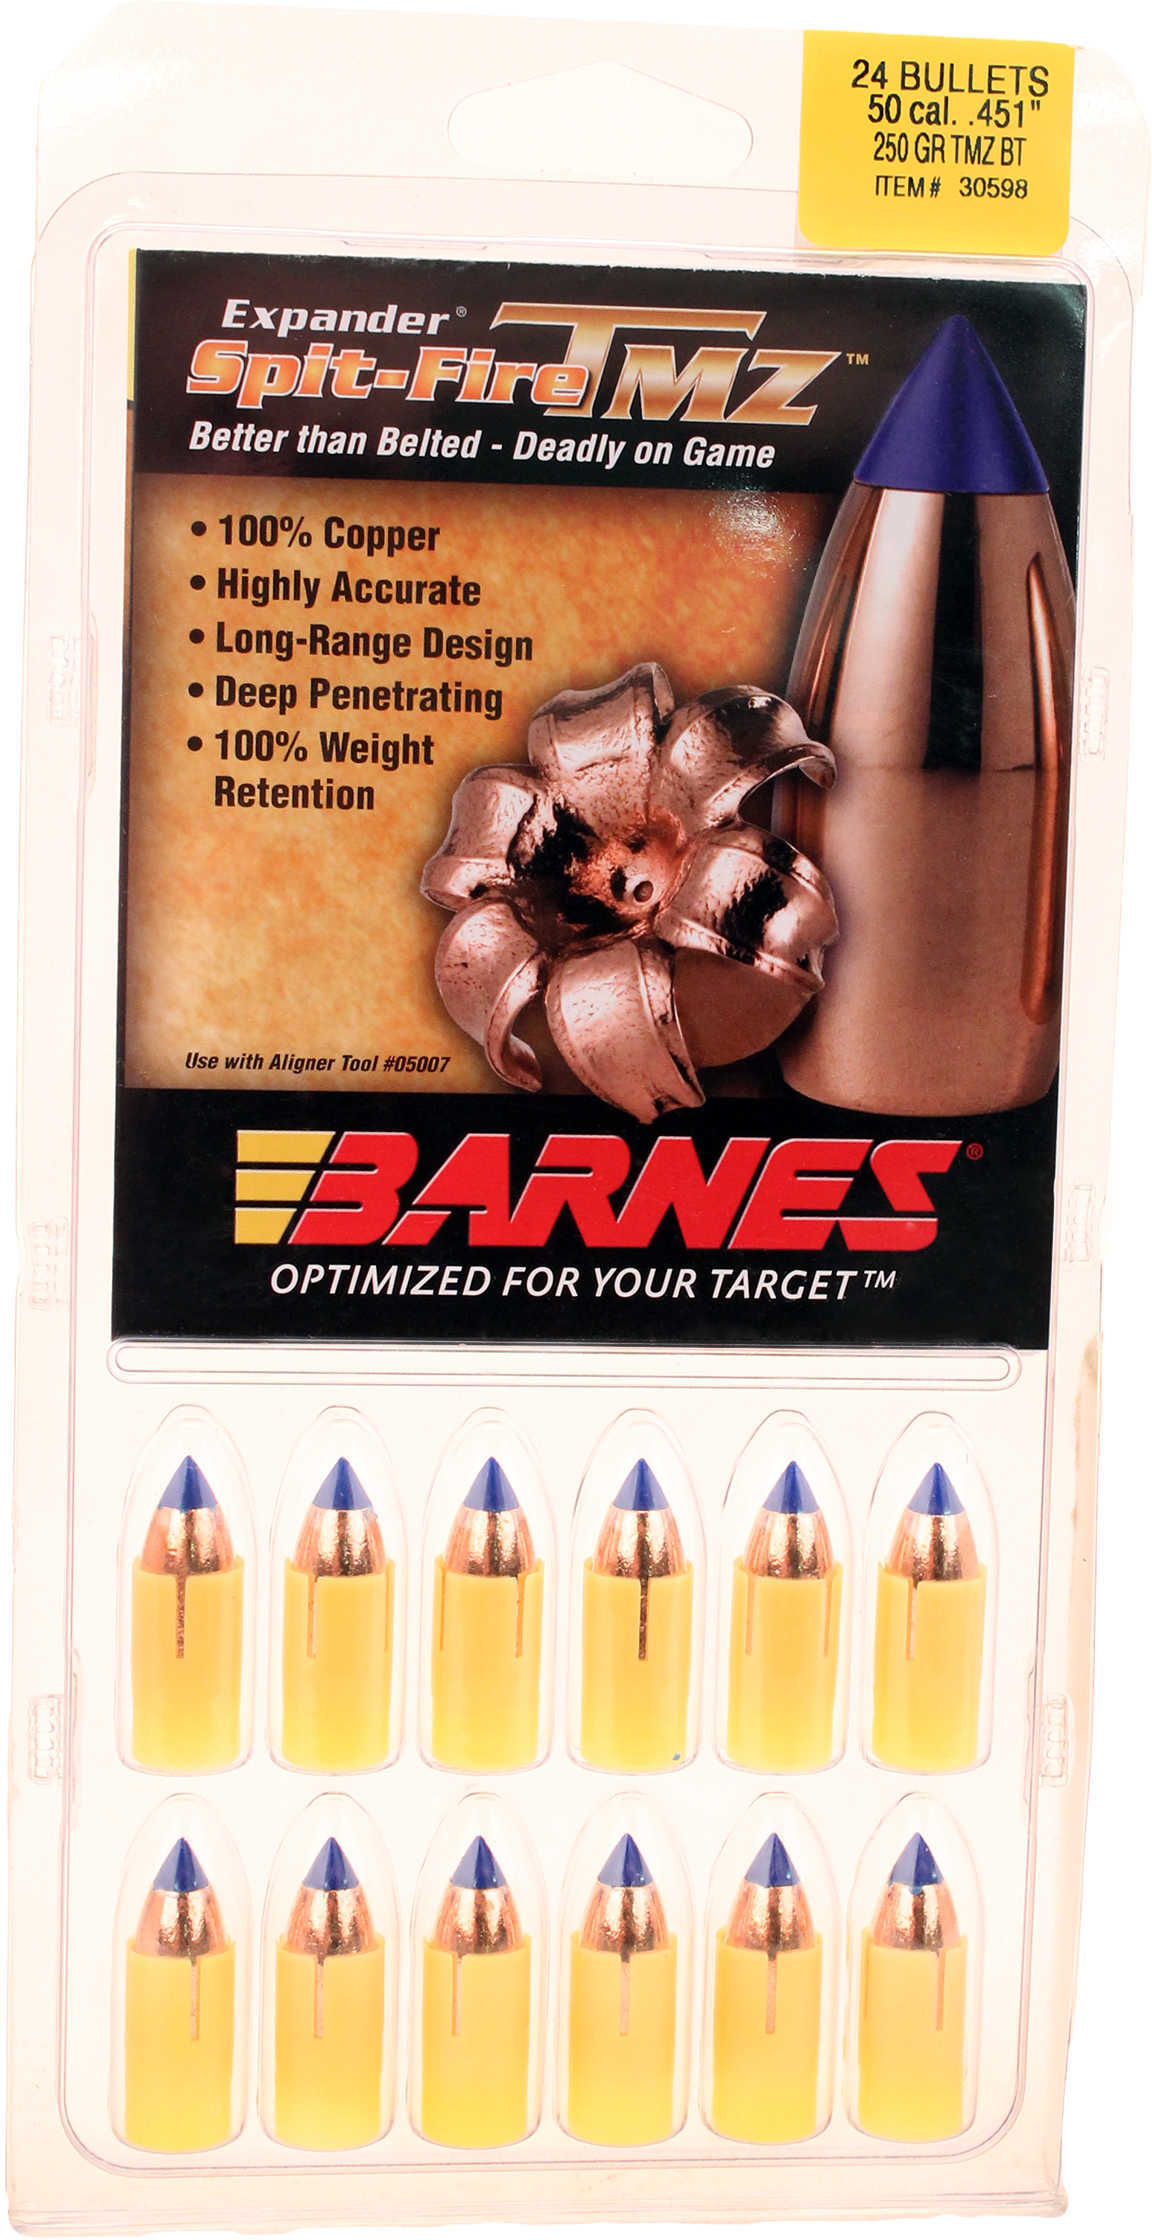 Barnes Spit-Fire T MZ 250 Grain Spitfire Muzzleloader Per 24 Md: 45180